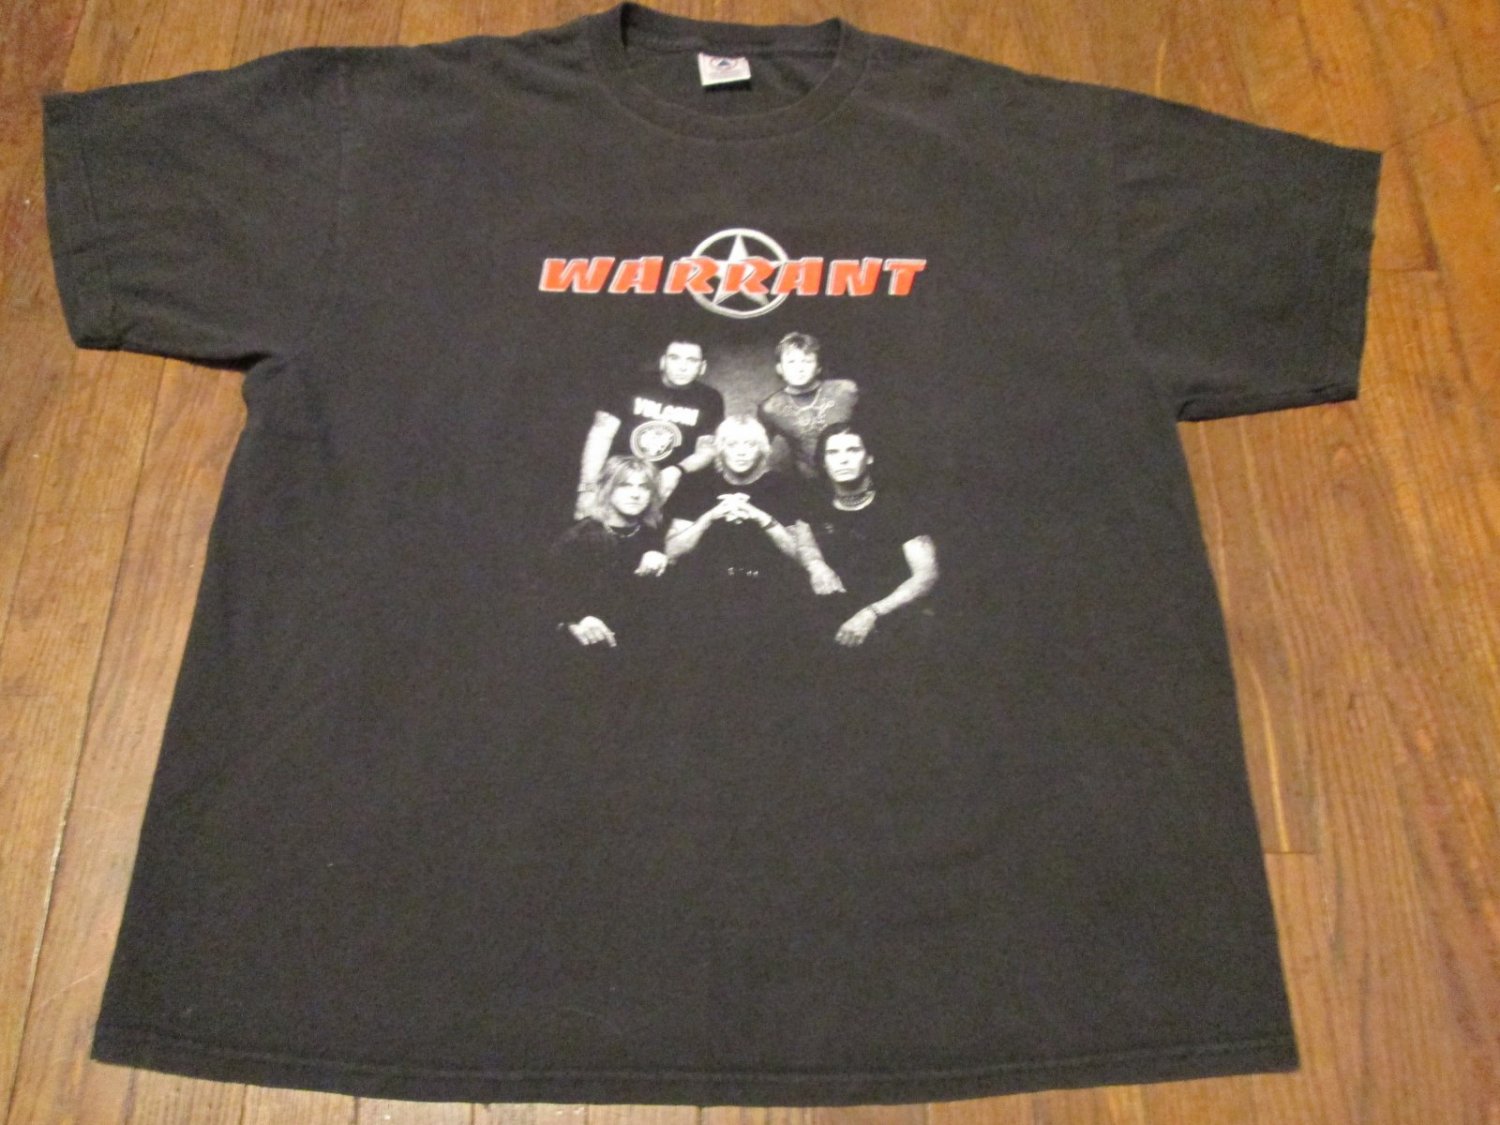 RARE 1989 Warrant Vintage 80's Down Boys Tour Concert T-Shirt Glam Hair ...